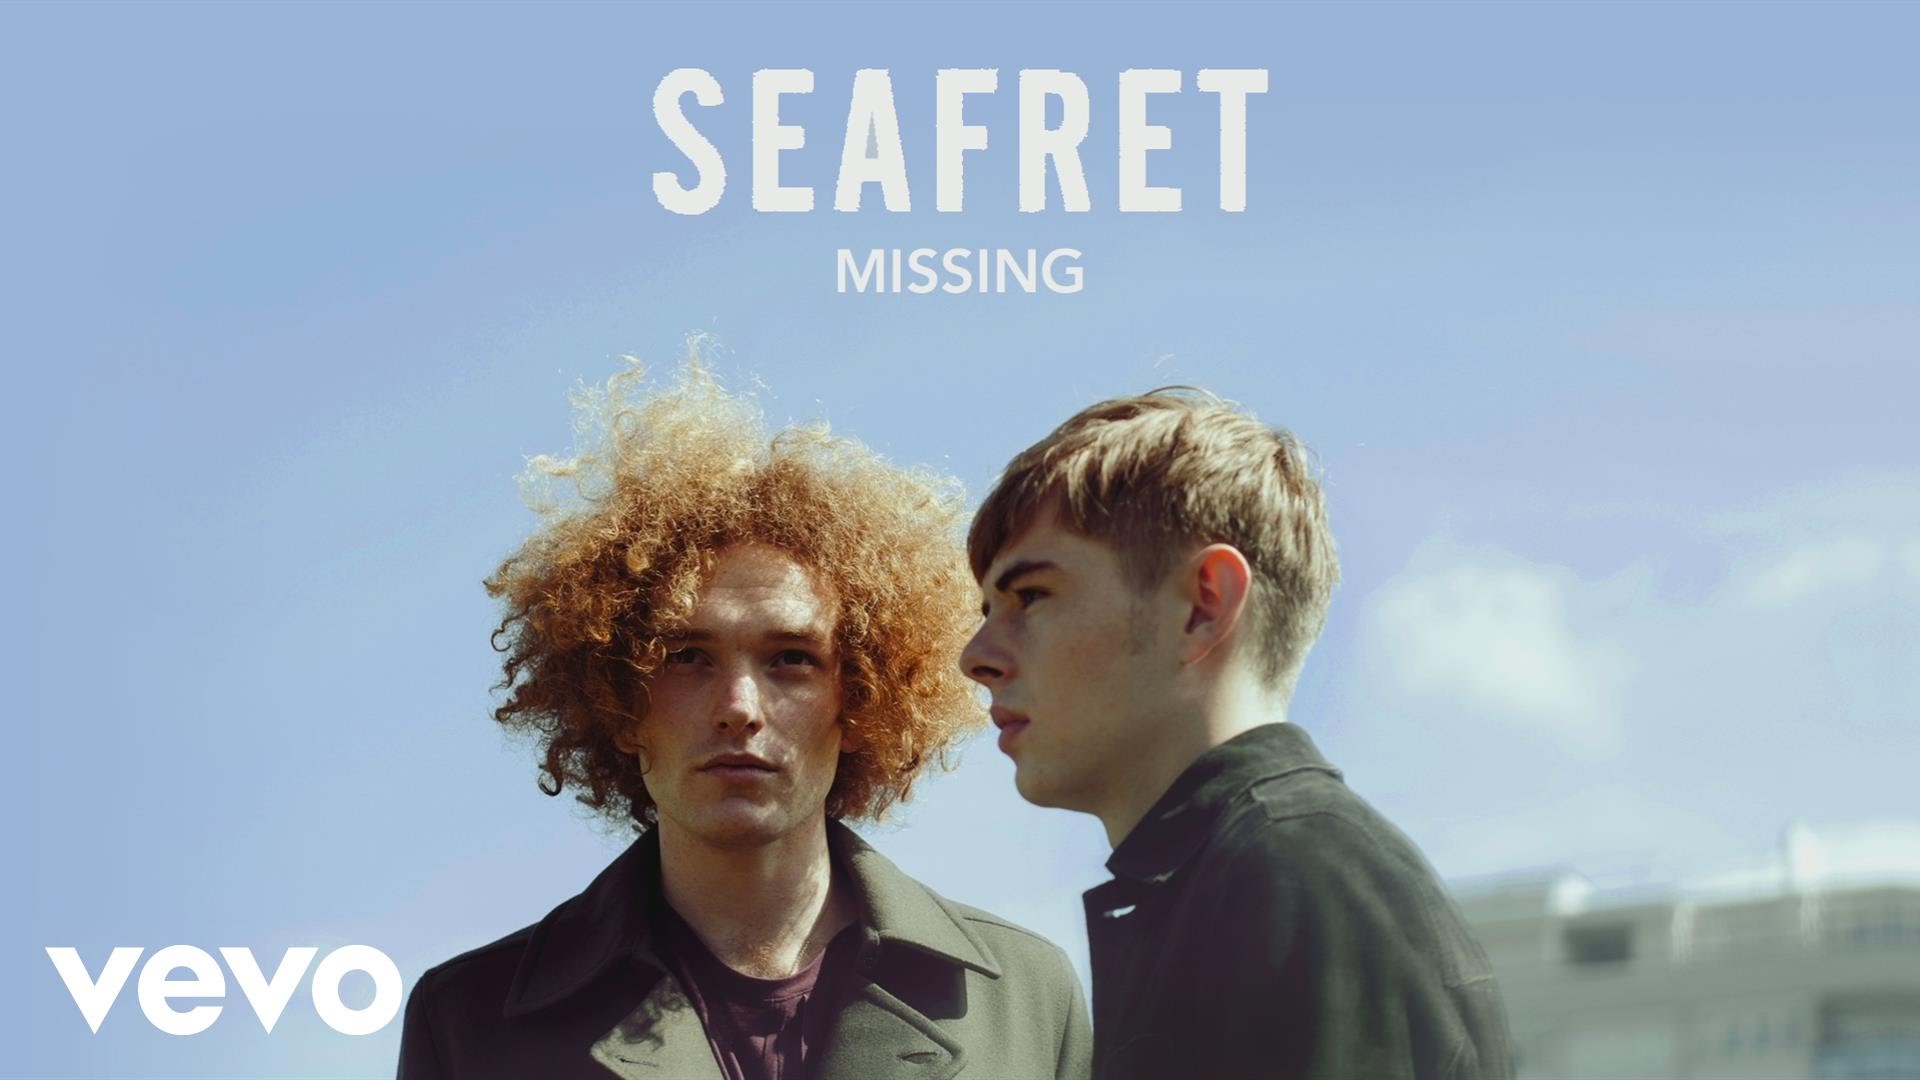 Seafret - Missing